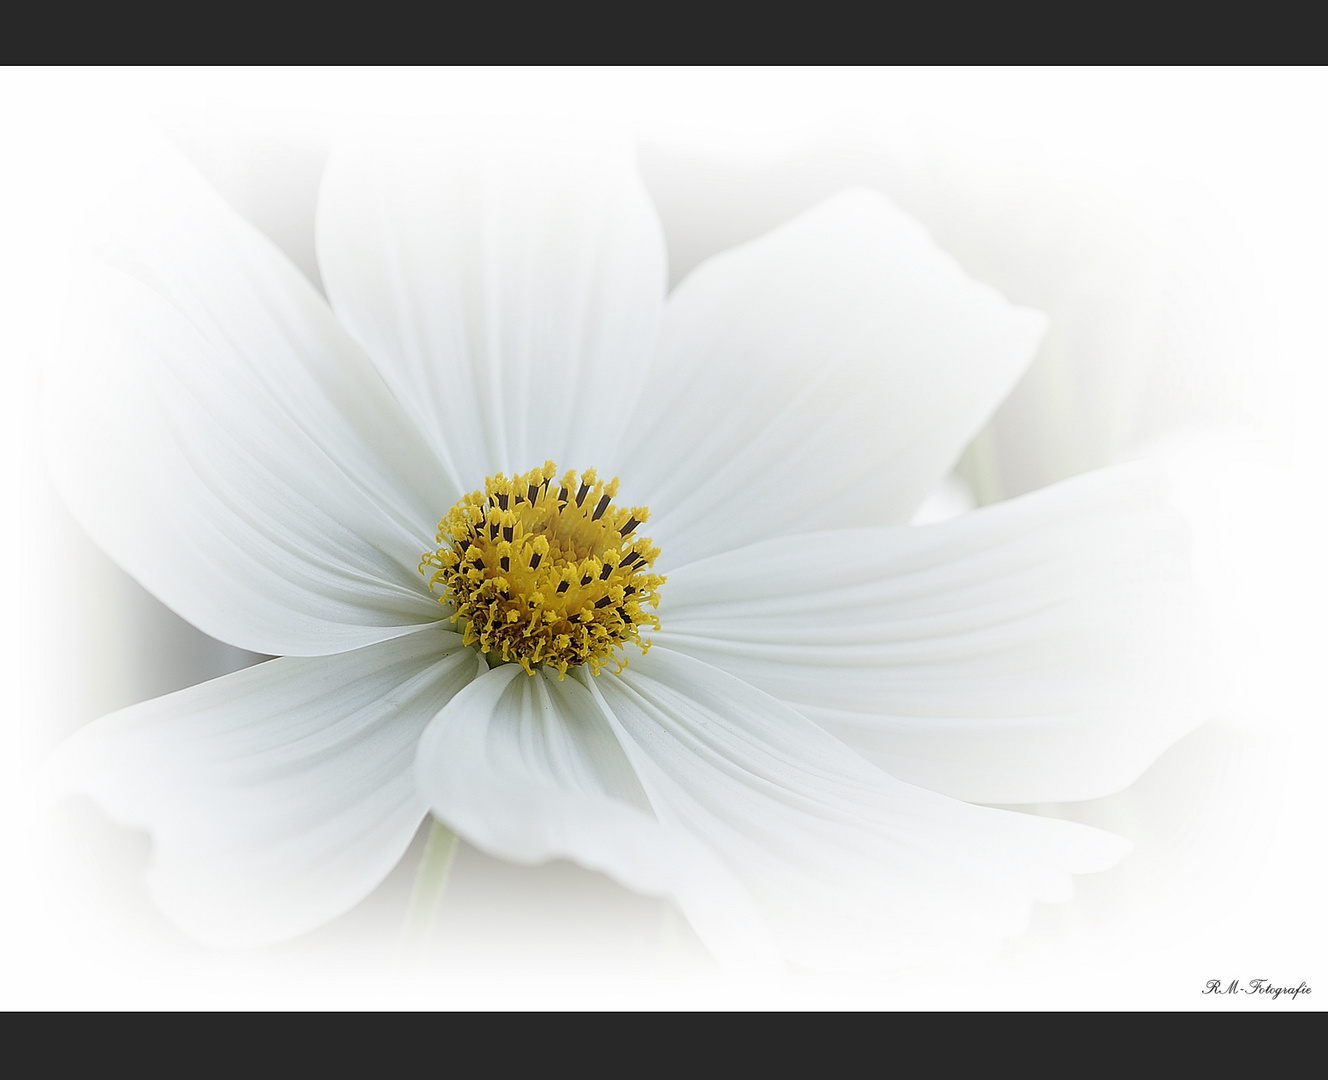 Flower in white